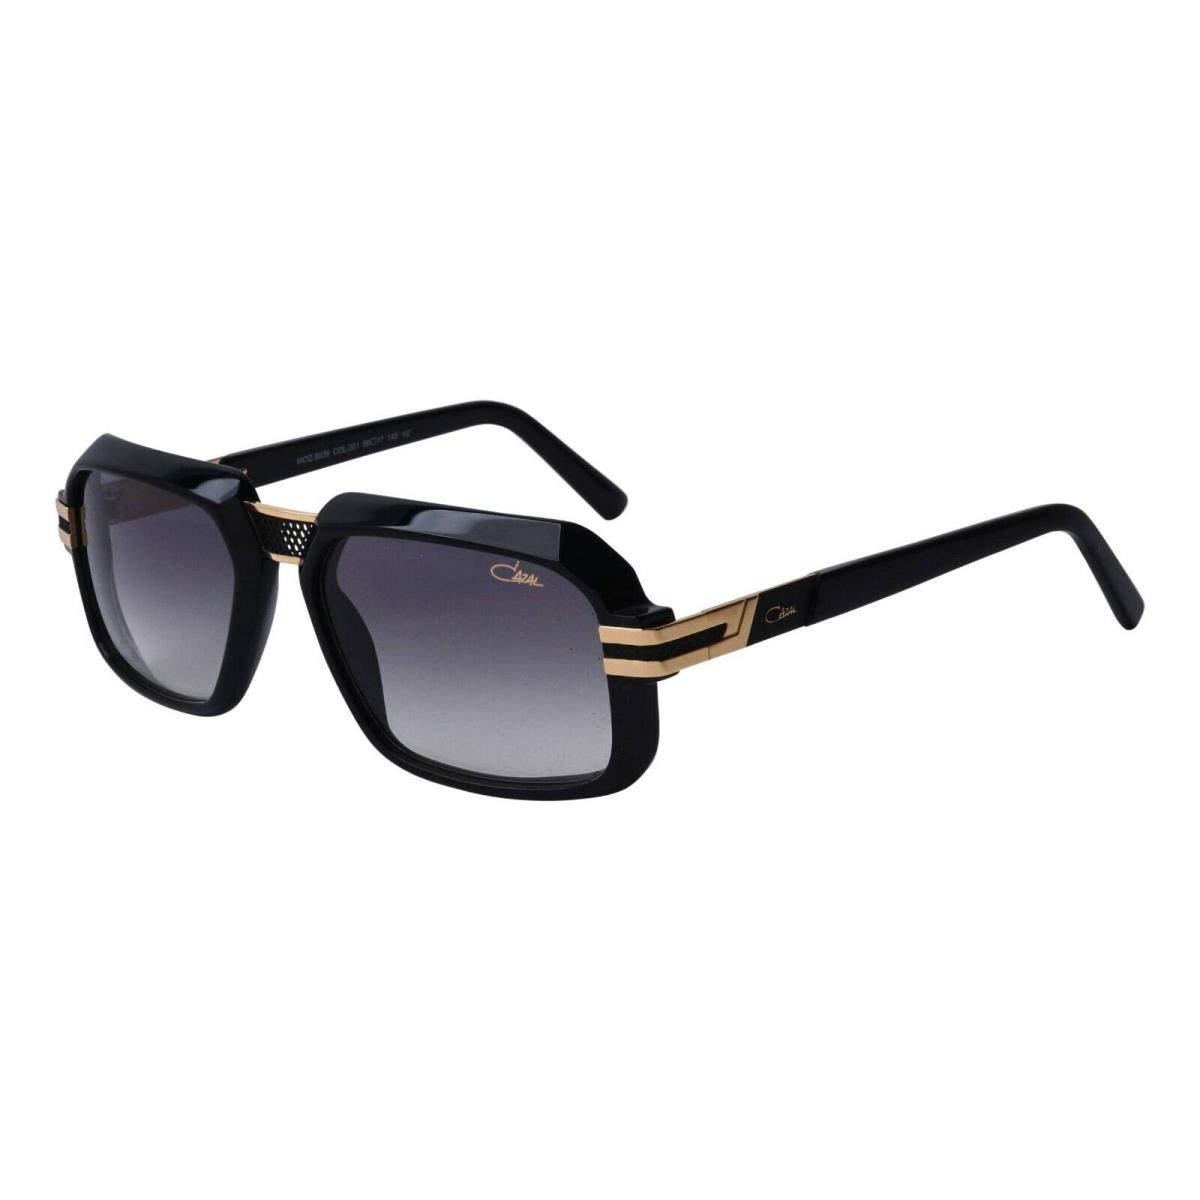 Cazal 8039 001 Shiny Black Gold -grey Gradient Lens Sunglasses 56MM